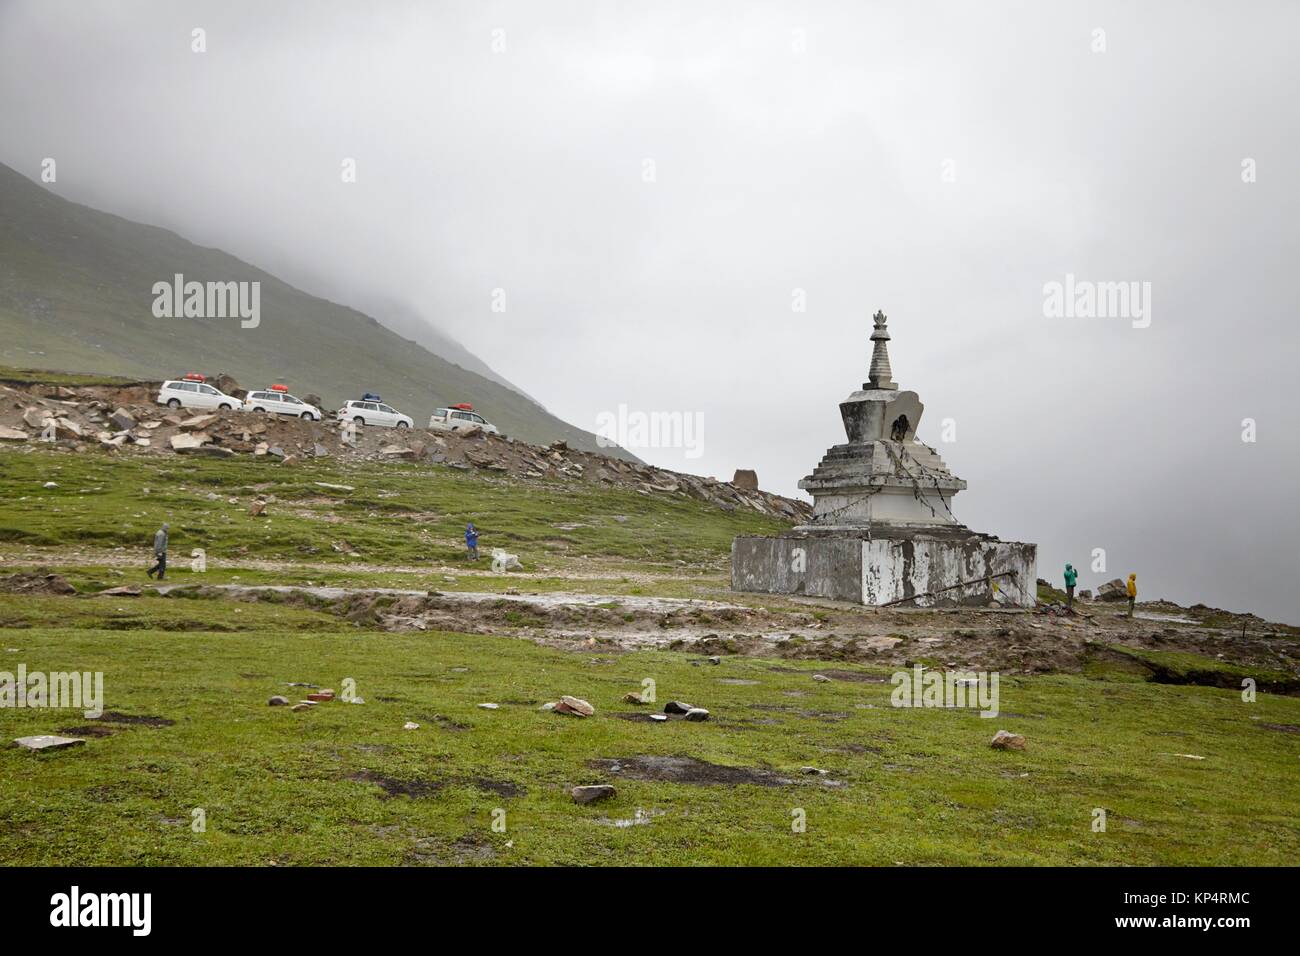 Rothang Mountain Pass , Manali - Leh Road, Himachal Pradesh, India. Stock Photo